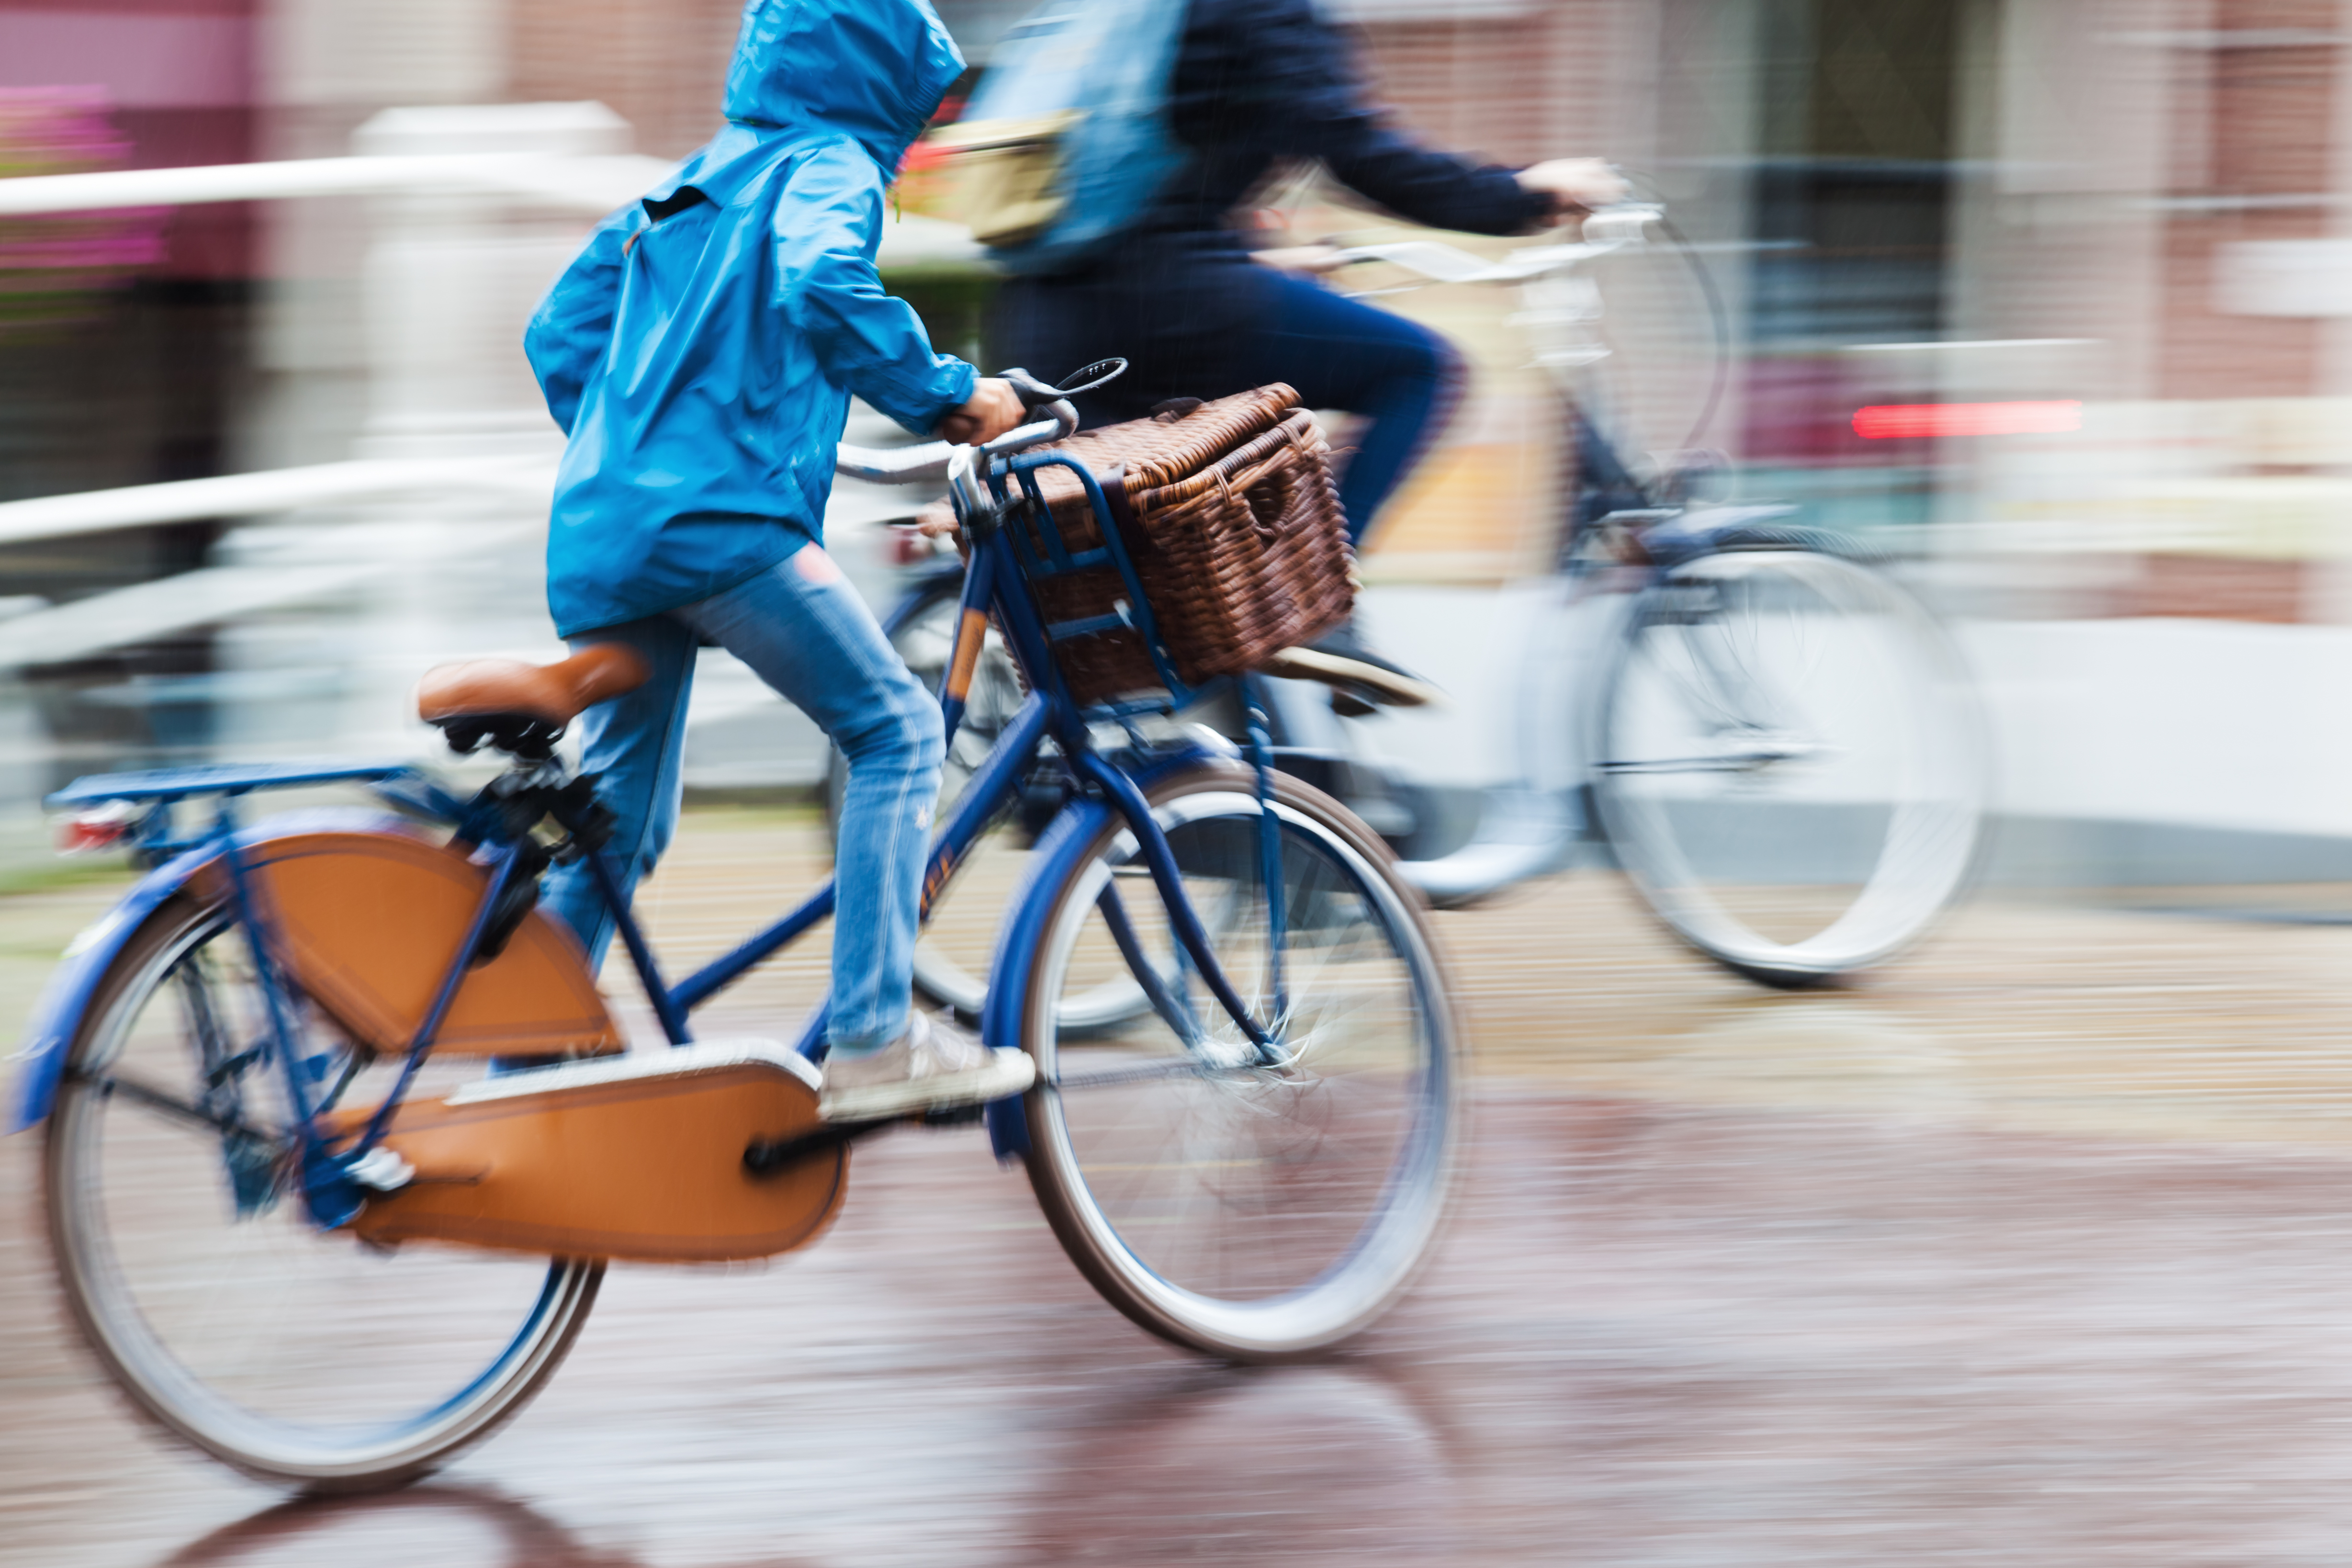 Riding bikes in the rain. Photo: Shutterstock